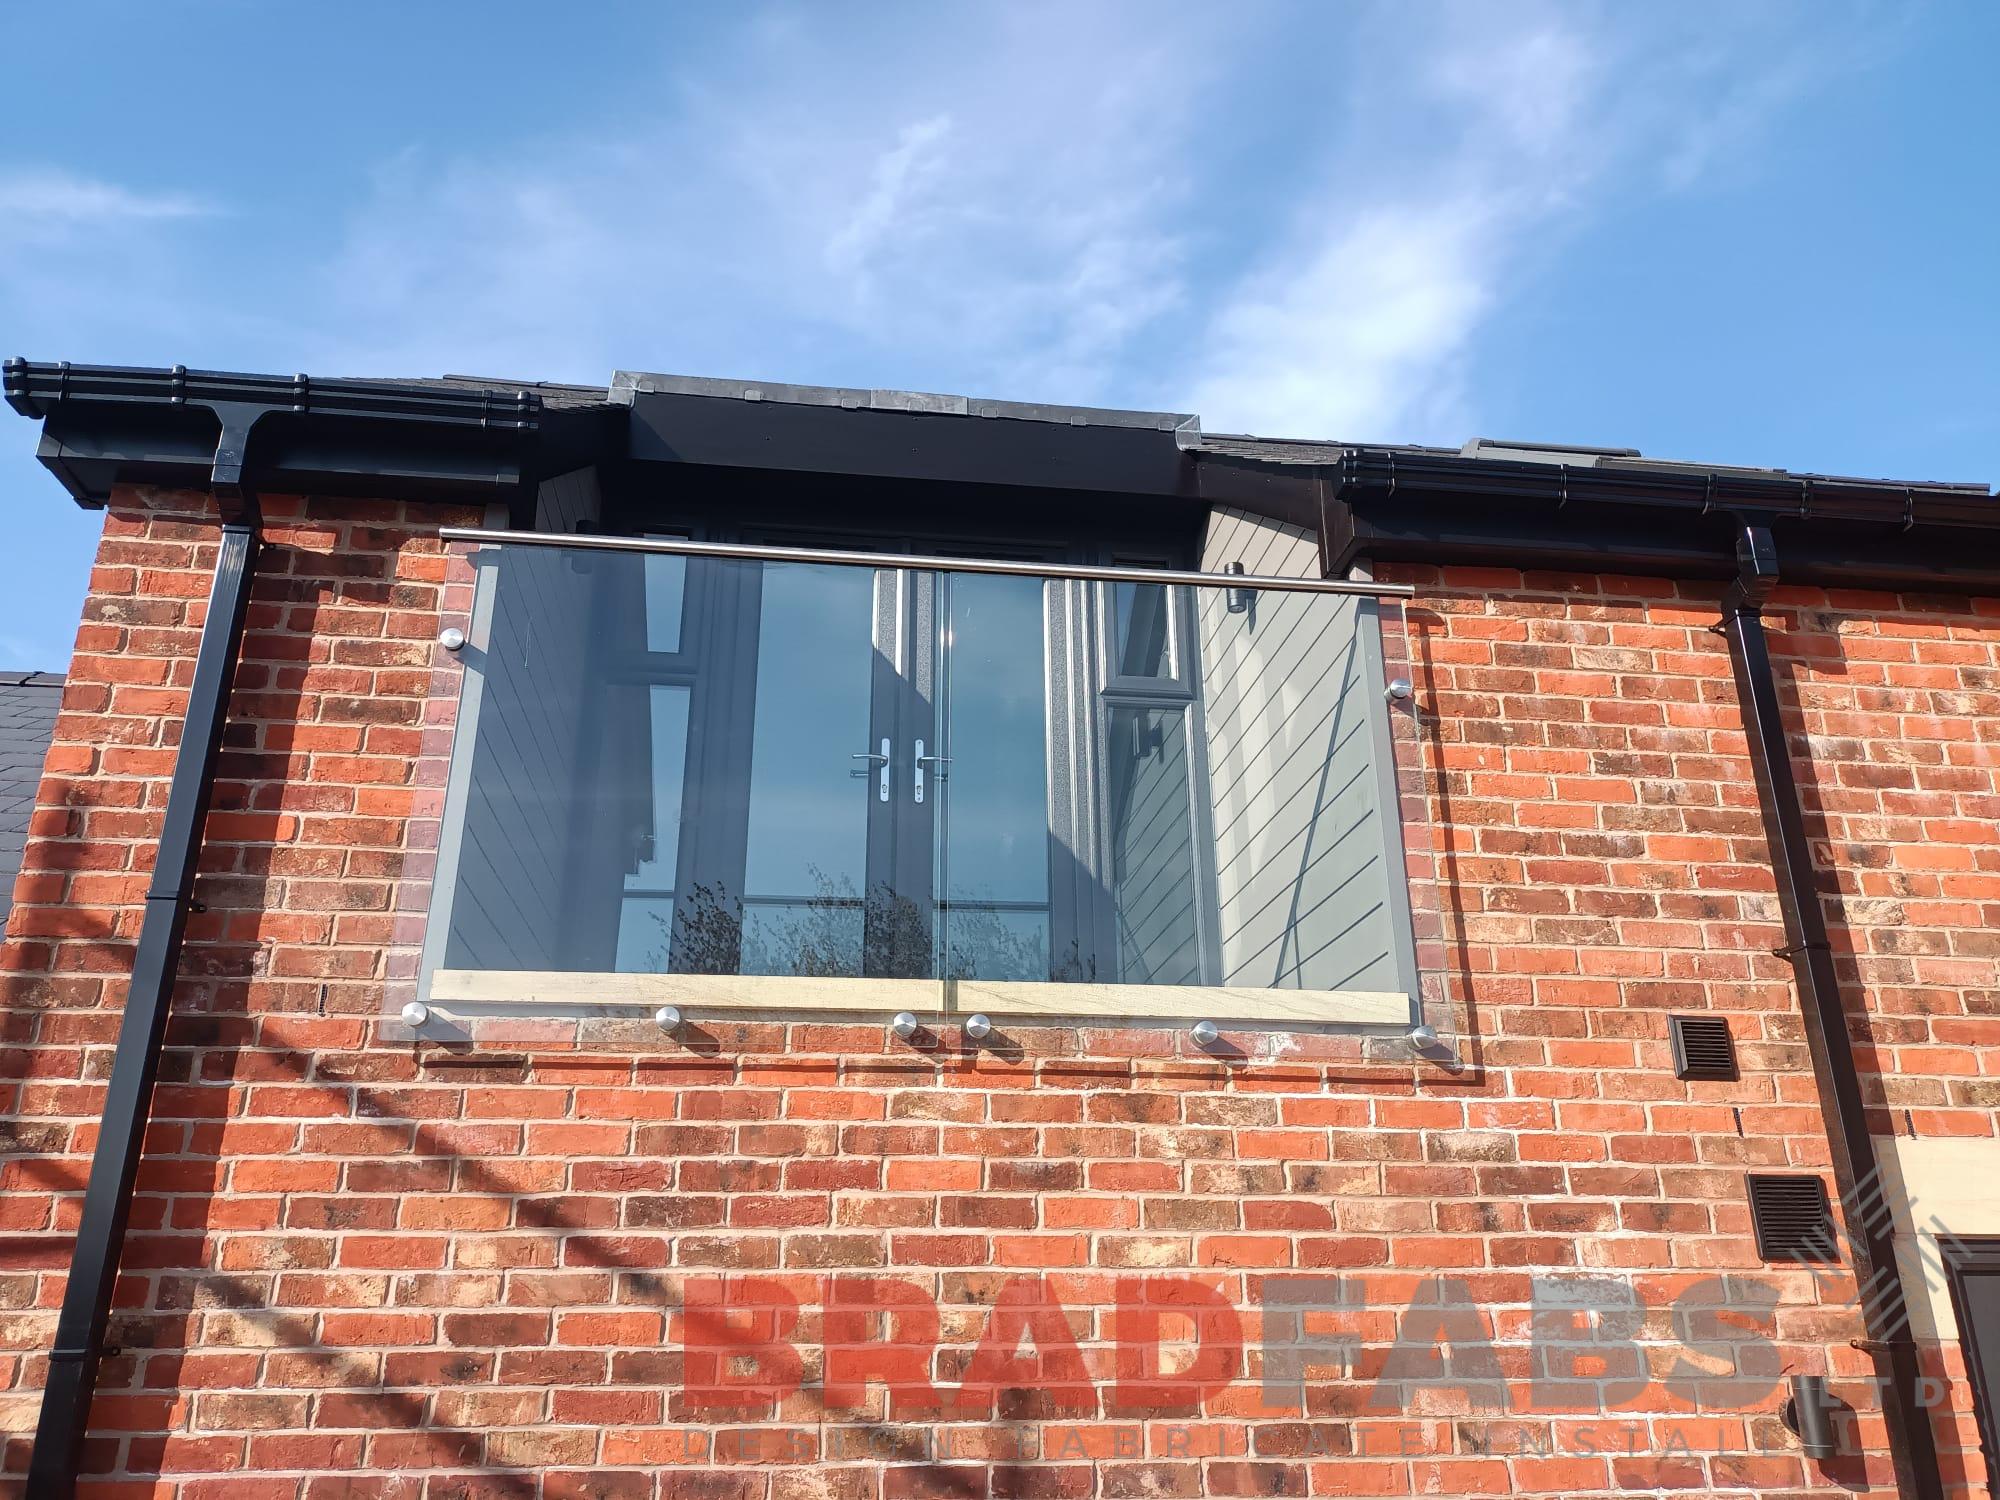 Glass balconette over doors by Bradfabs